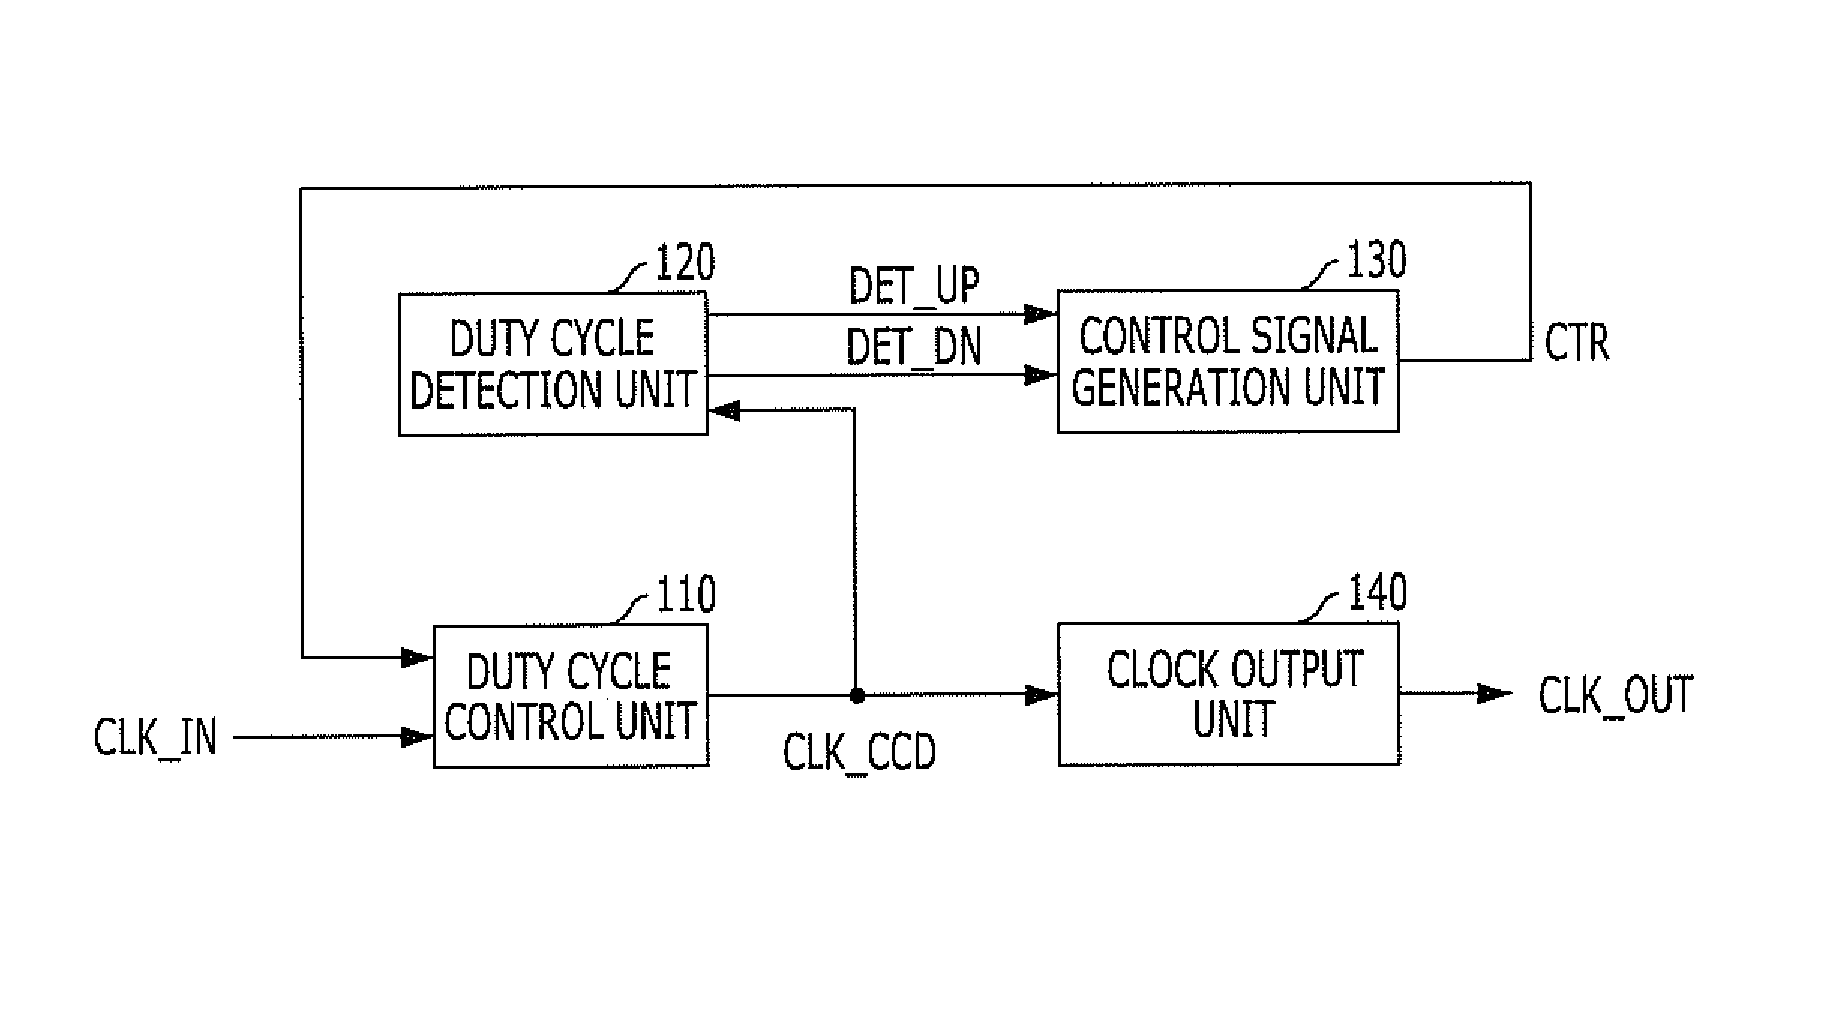 Duty cycle correction circuit